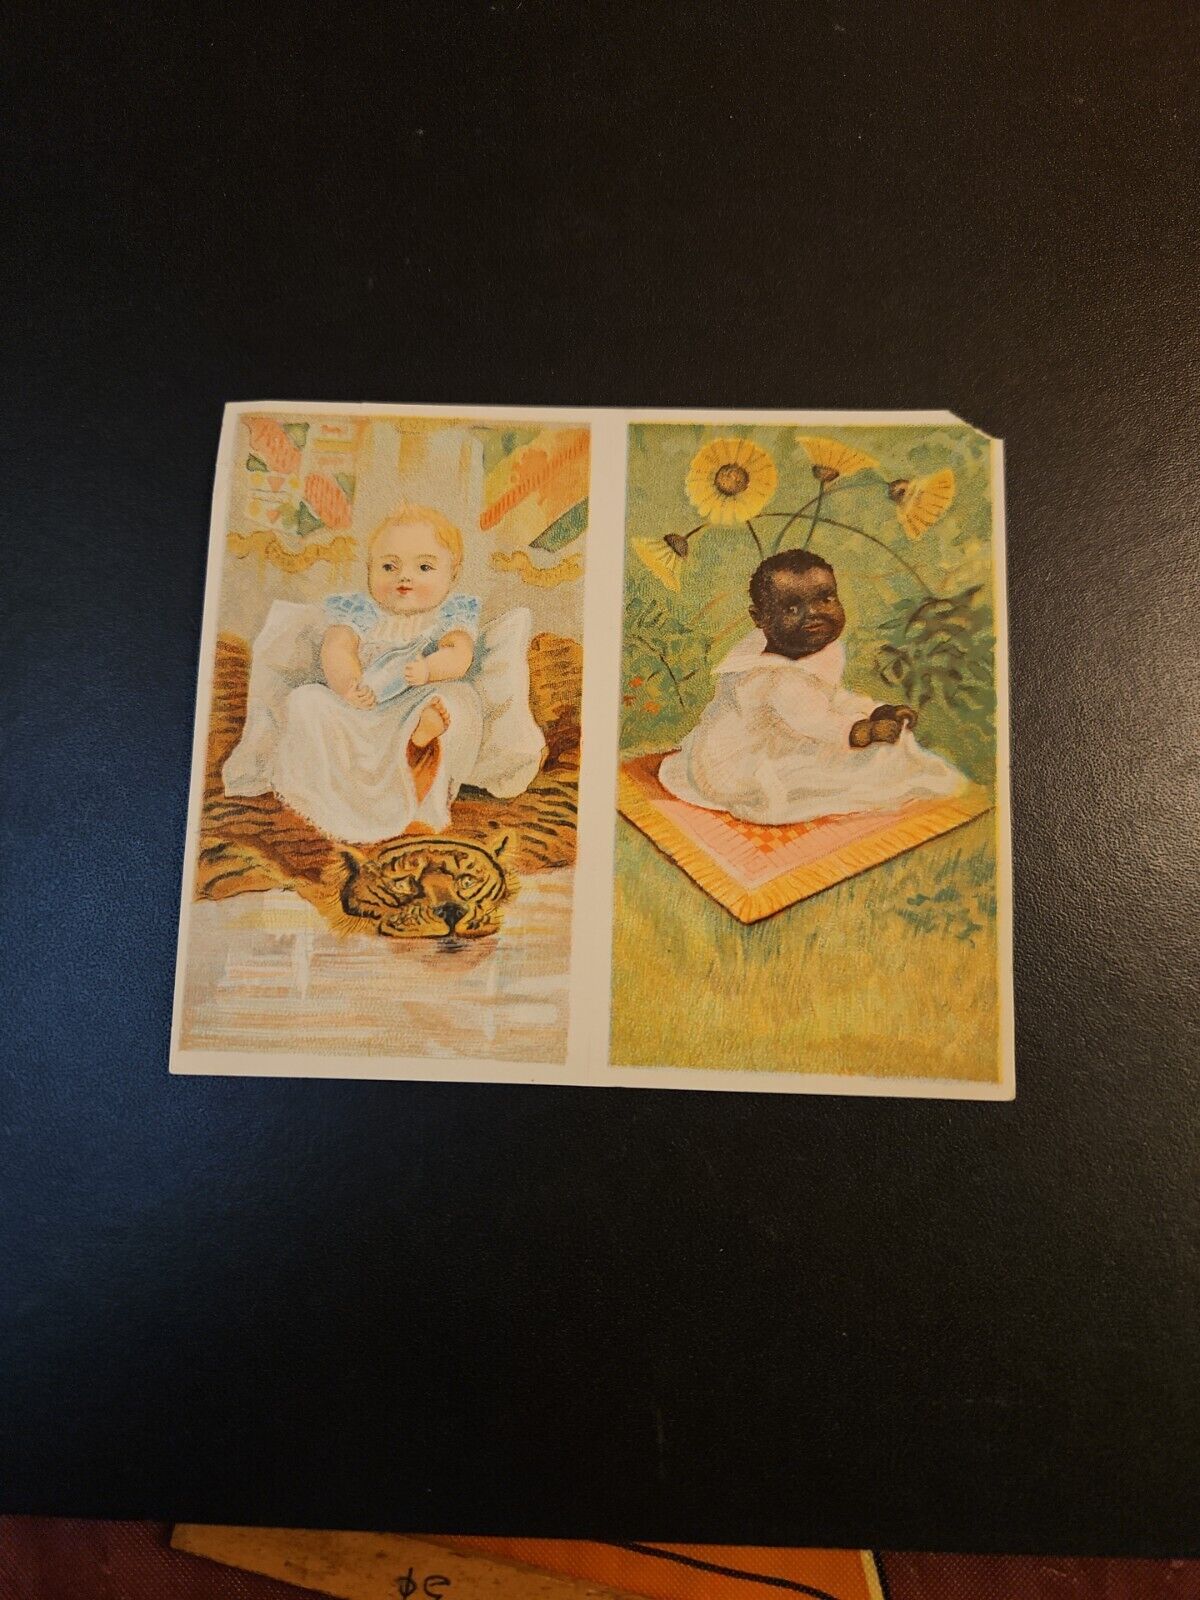 1900s Black Americana Ephemera Card